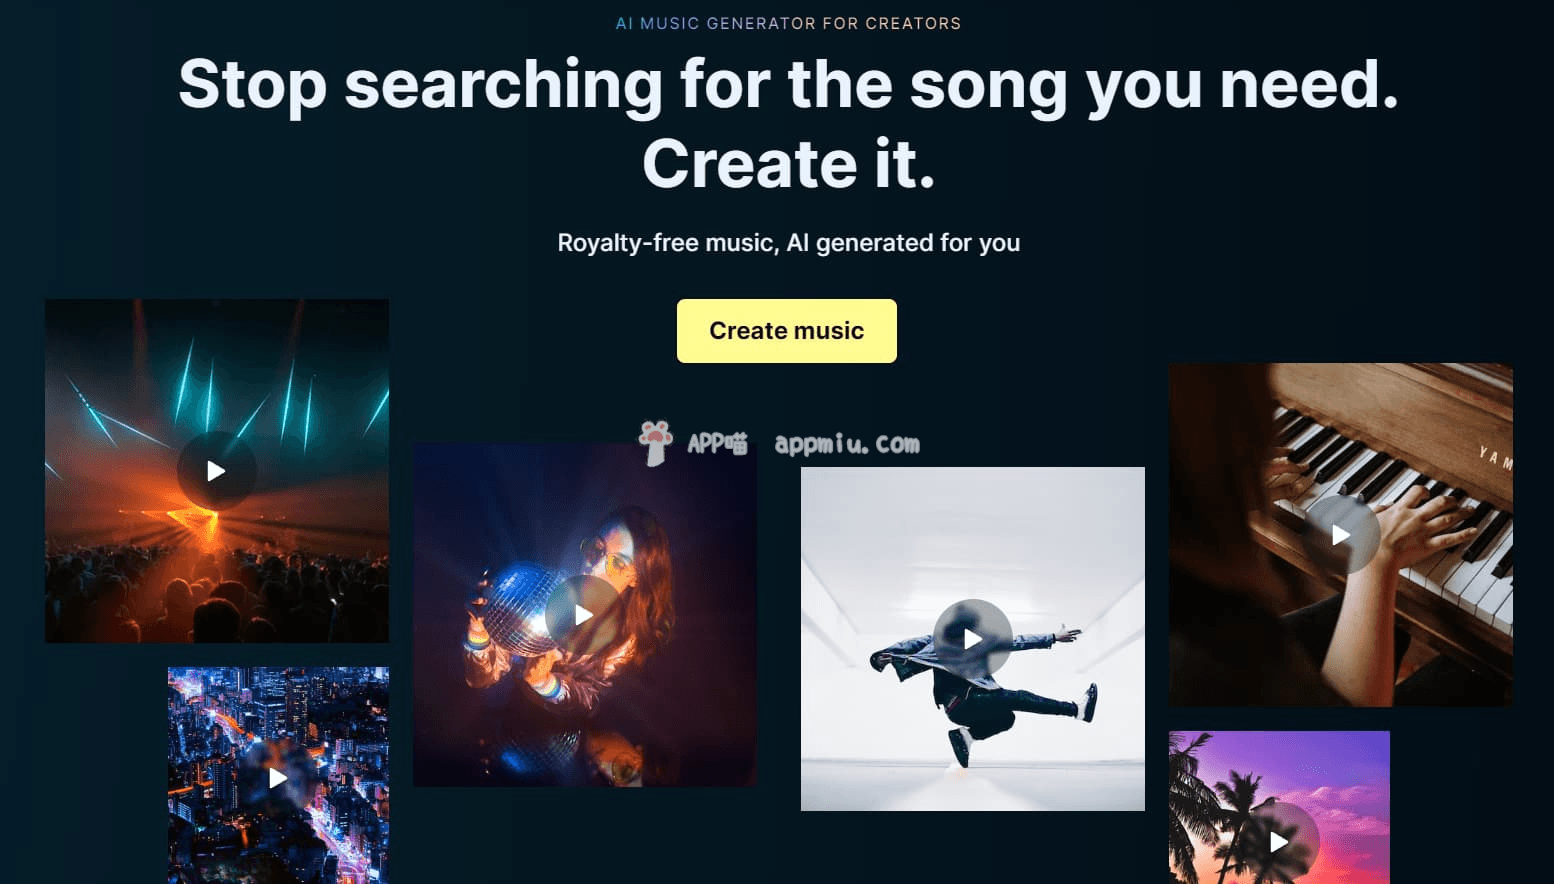 soundraw 全新的AI音乐平台 AI MUSIC GENERATOR FOR CREATORS-APP喵：阿喵软件资源分享